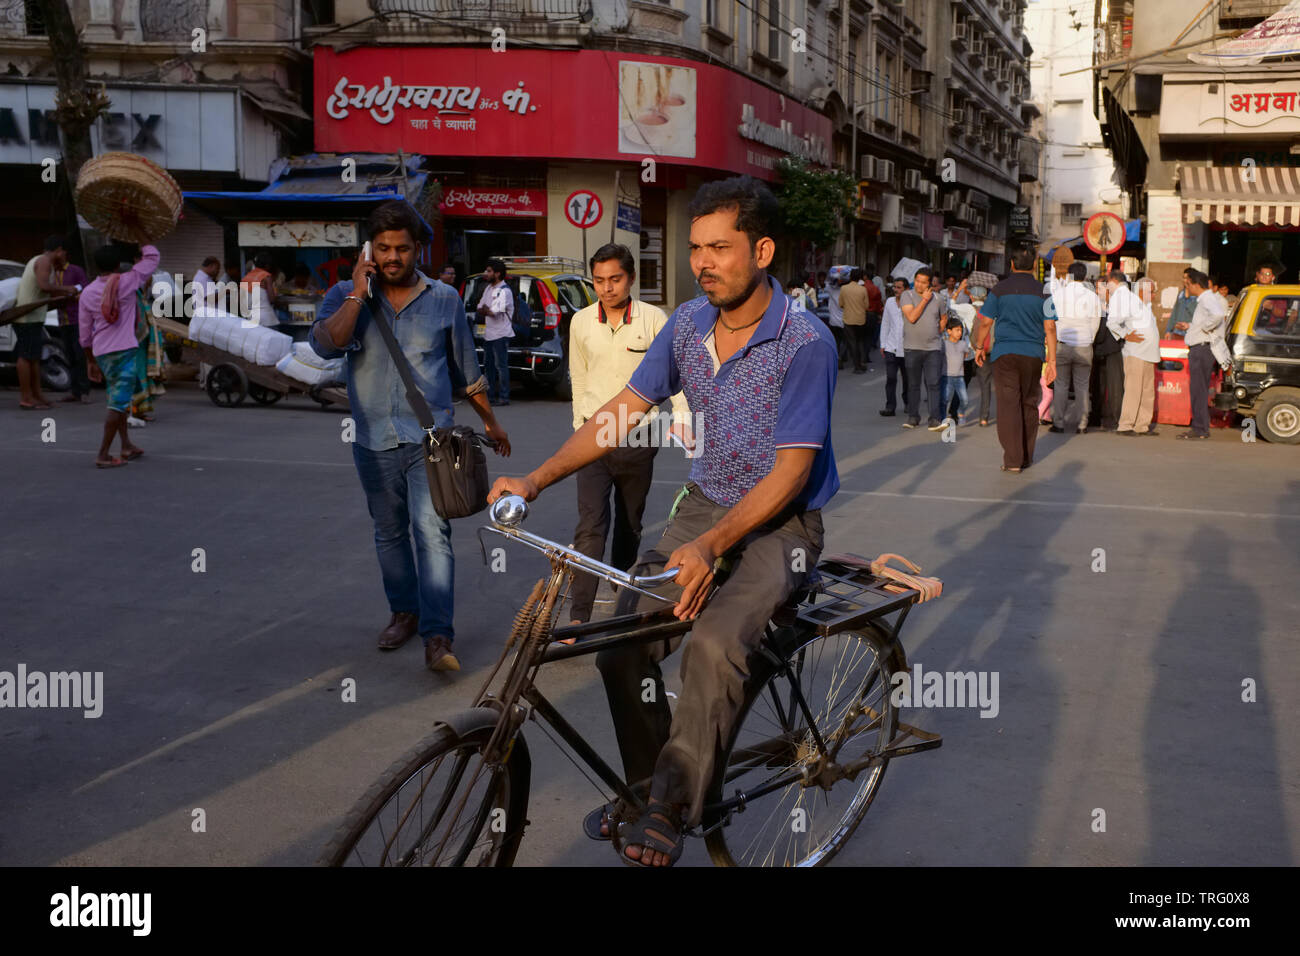 A cyclist rides through Kalbadevi Rd., Bhuleshawar, Mumbai, India, one of the city's major trading areas Stock Photo